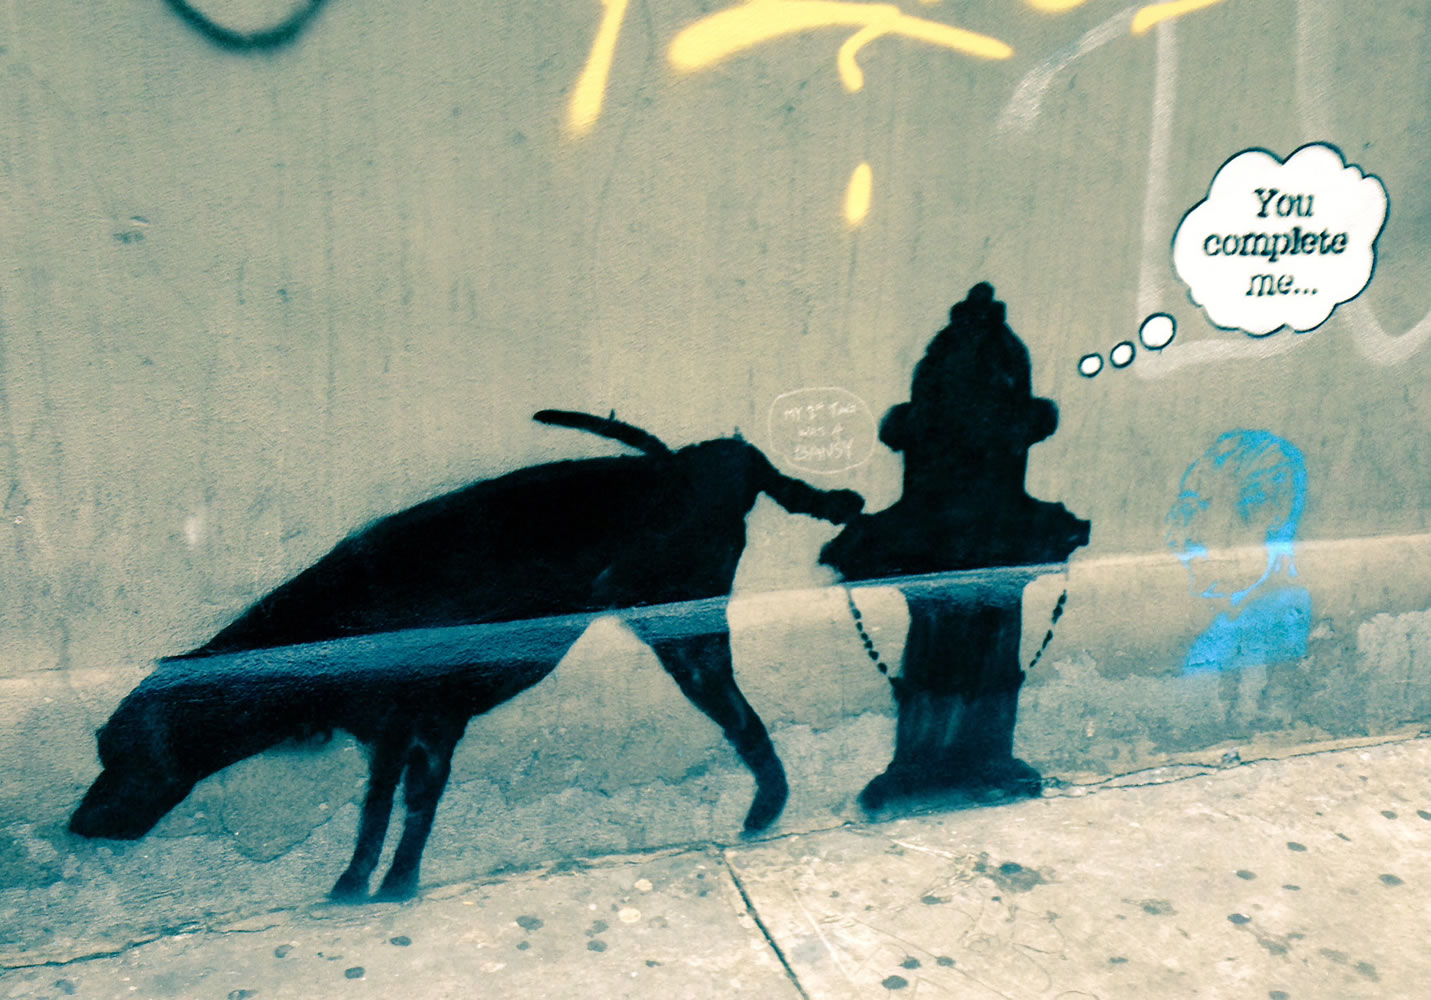 Graffiti by secretive British artist Banksy is seen in New York.